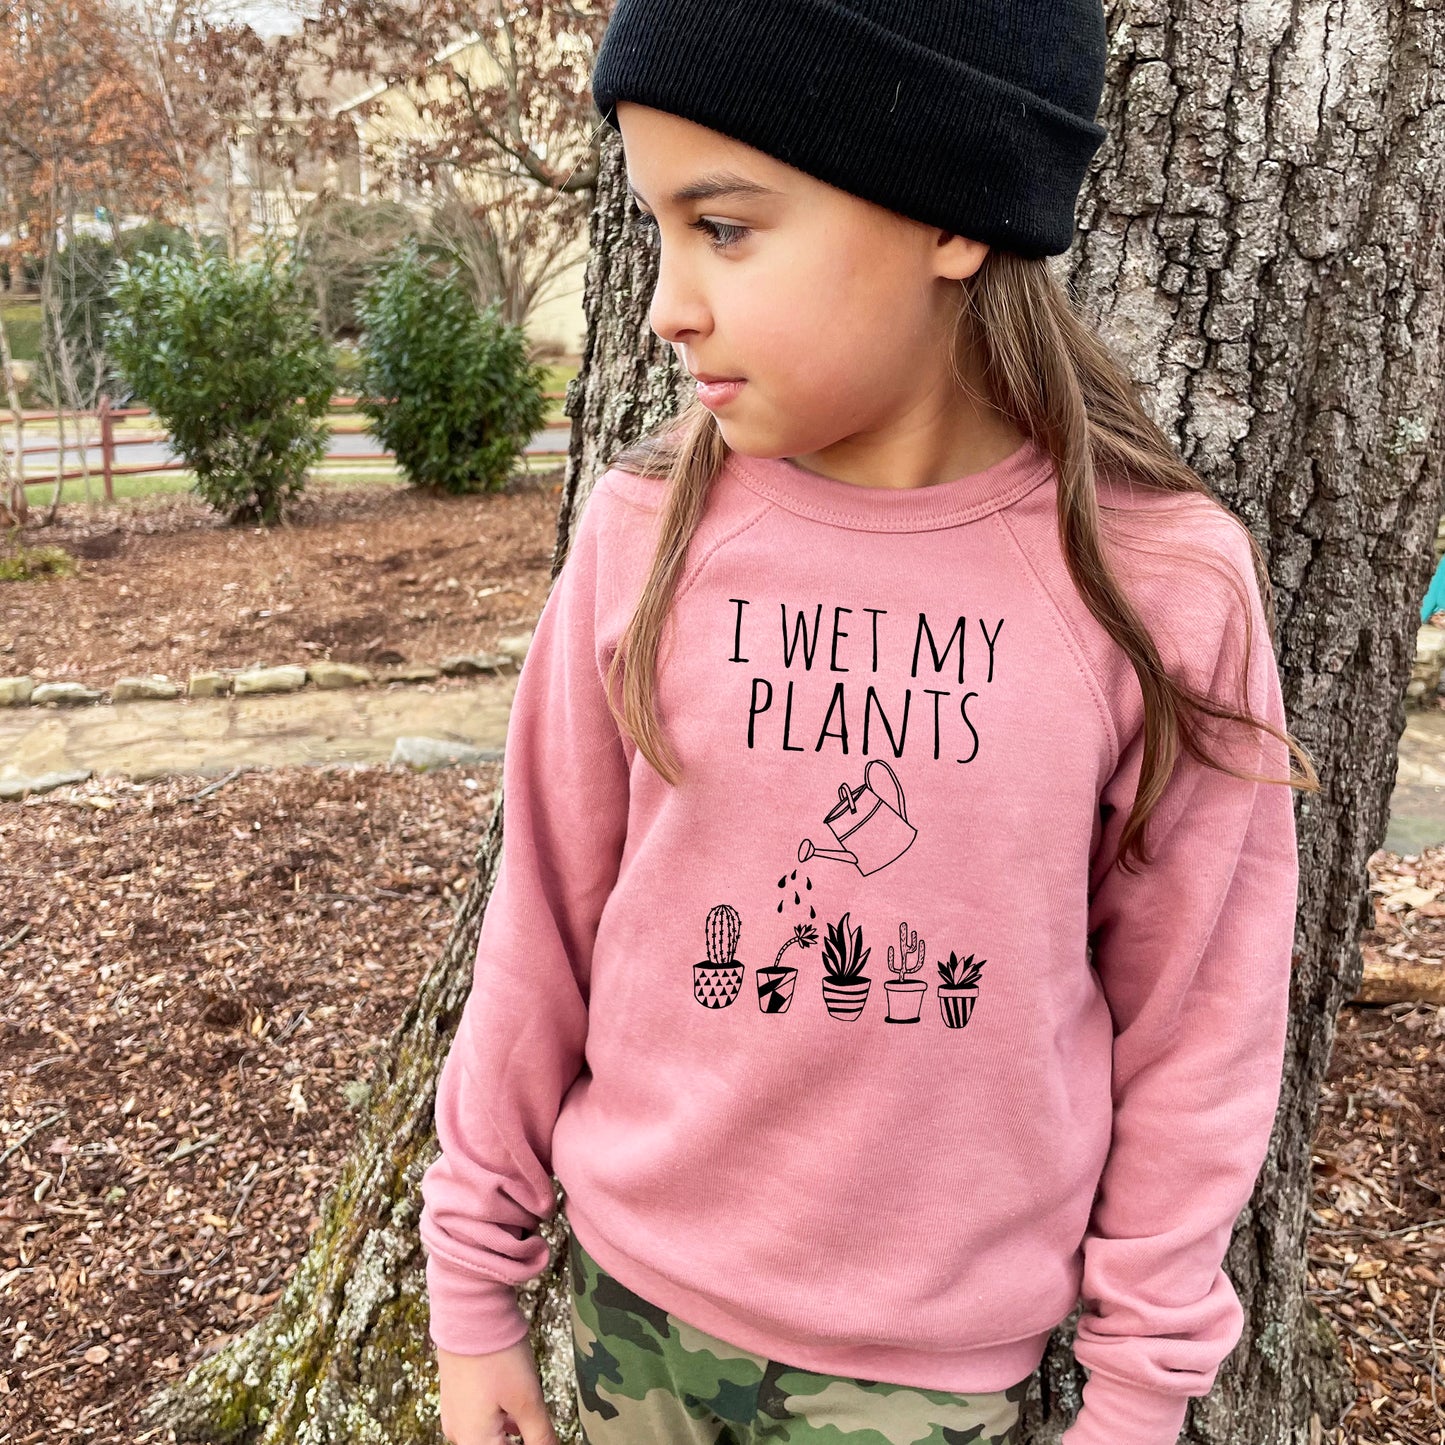 I Wet My Plants - Kid's Sweatshirt - Heather Gray or Mauve